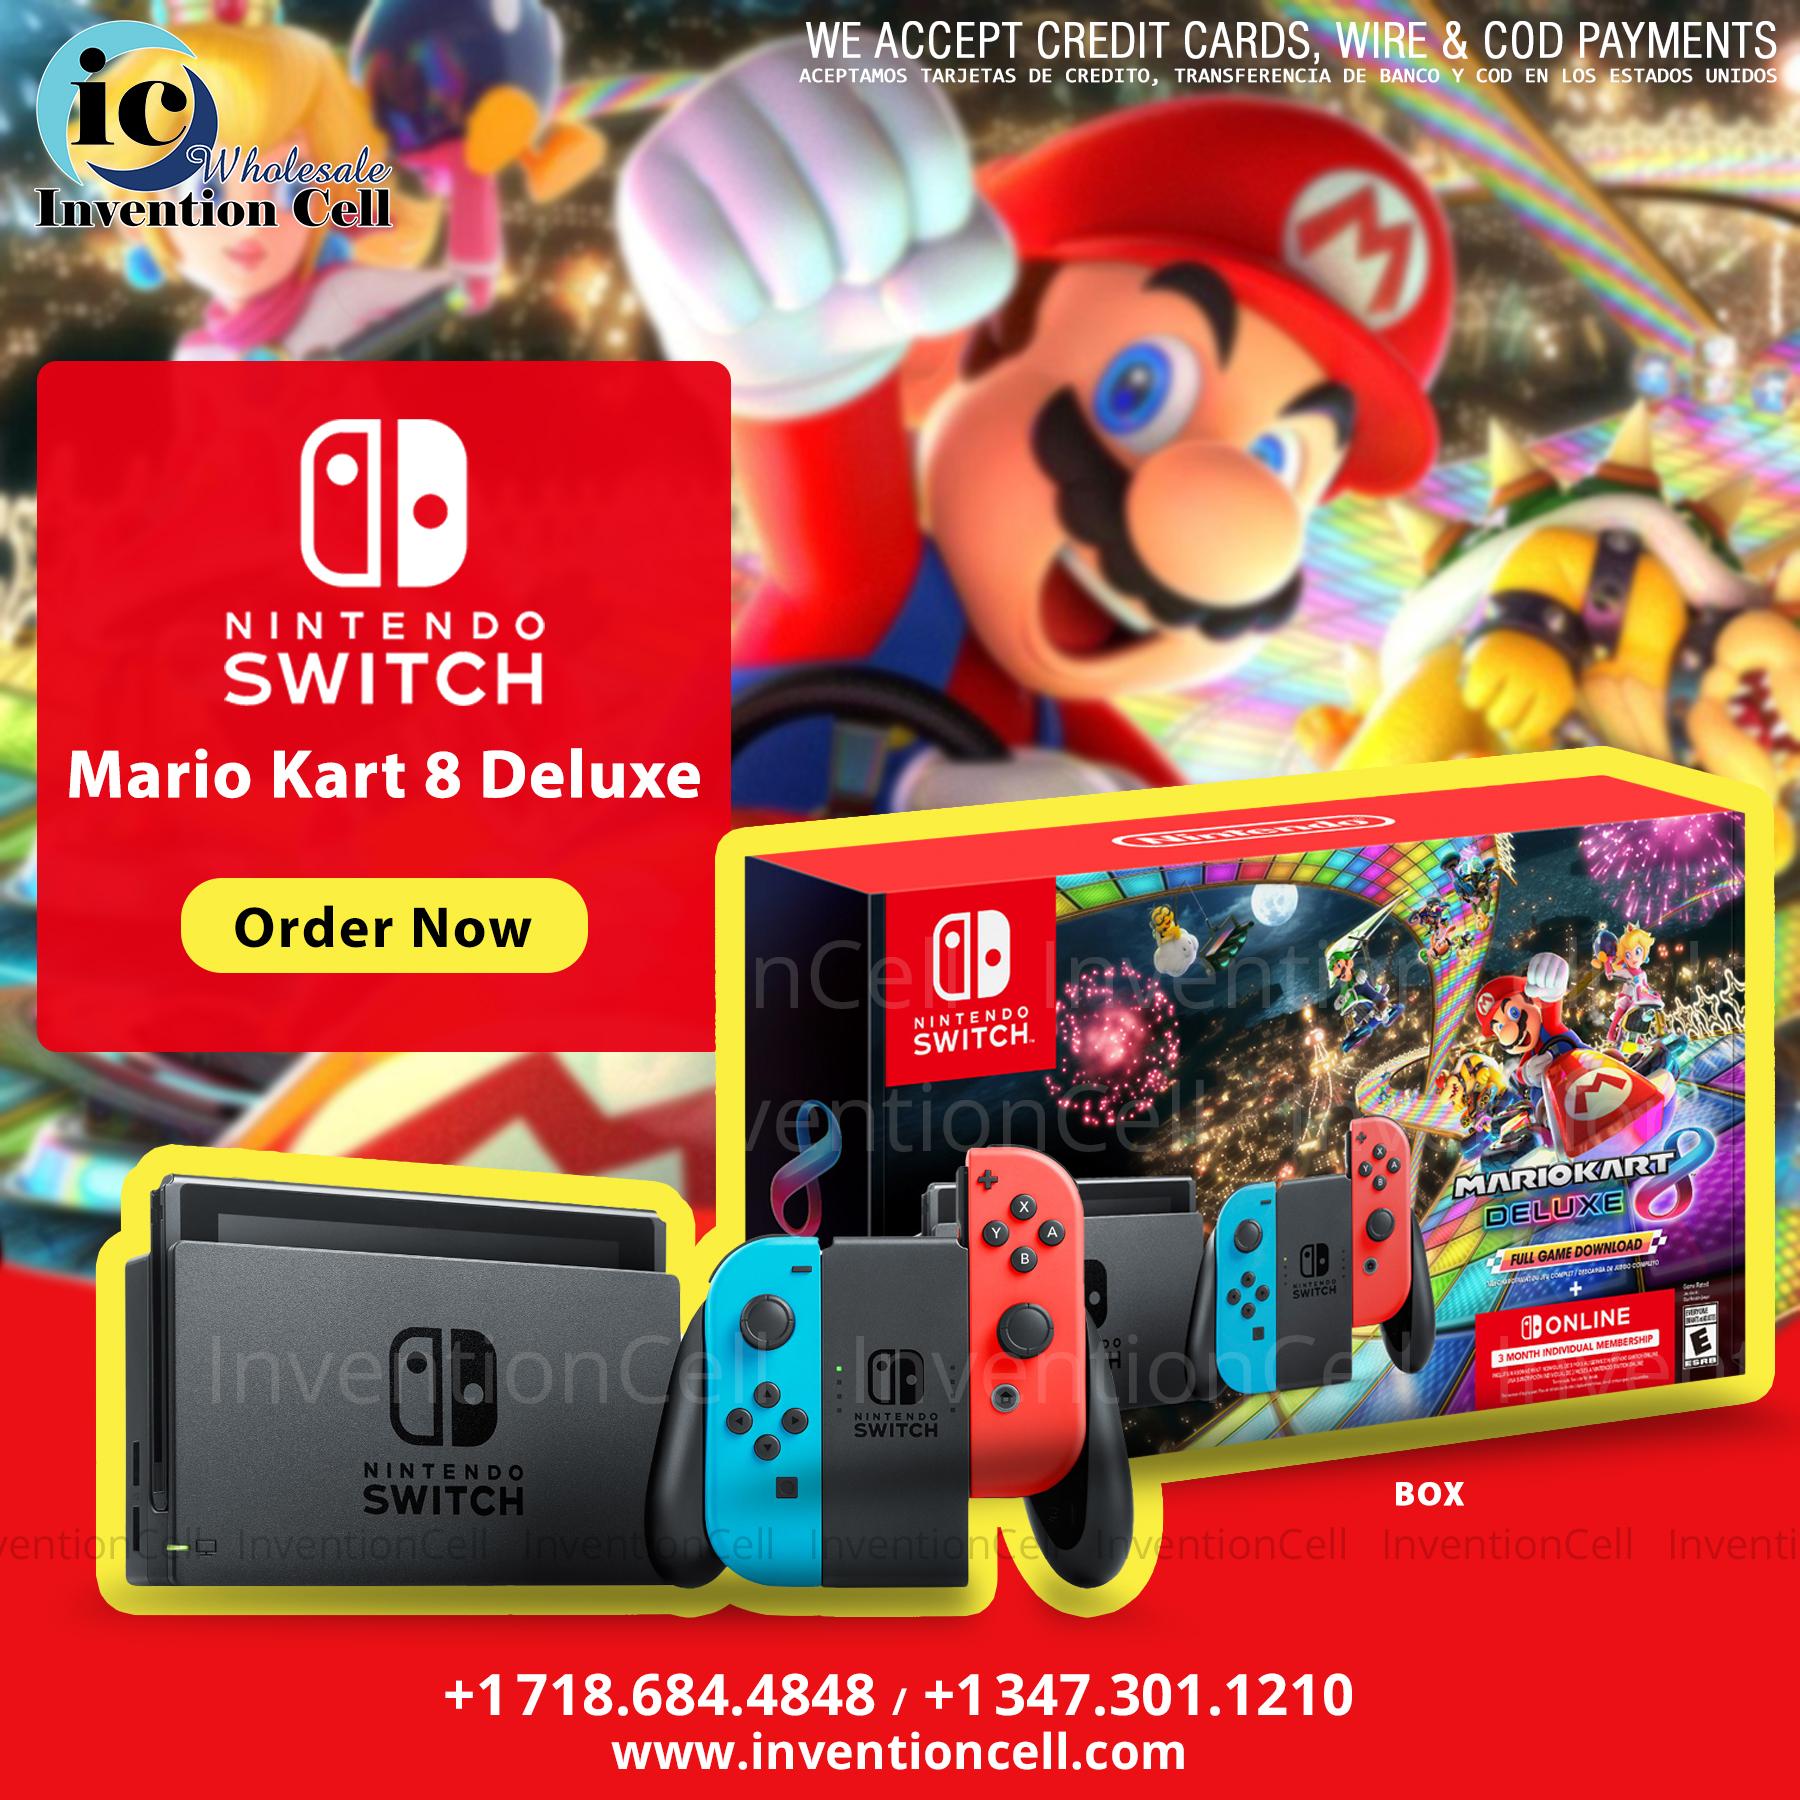 Nintendo Switch Nintendo Switch Mario Kart 8 Wholesale